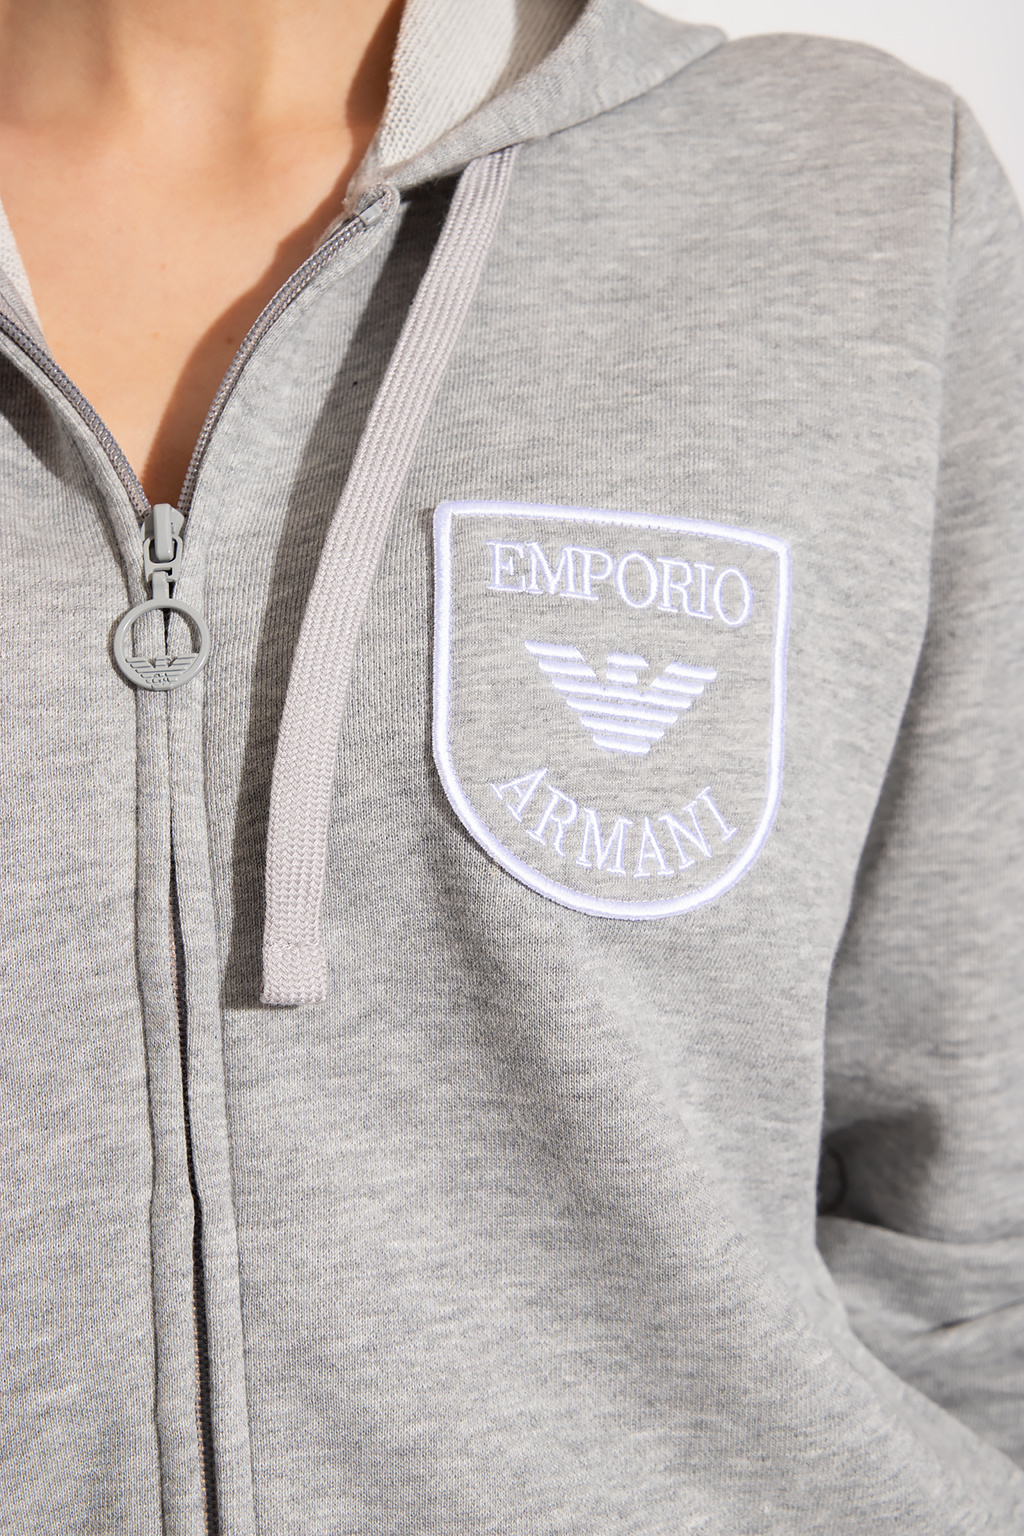 Emporio Armani Emporio Armani slim-cut stripe-print shirt